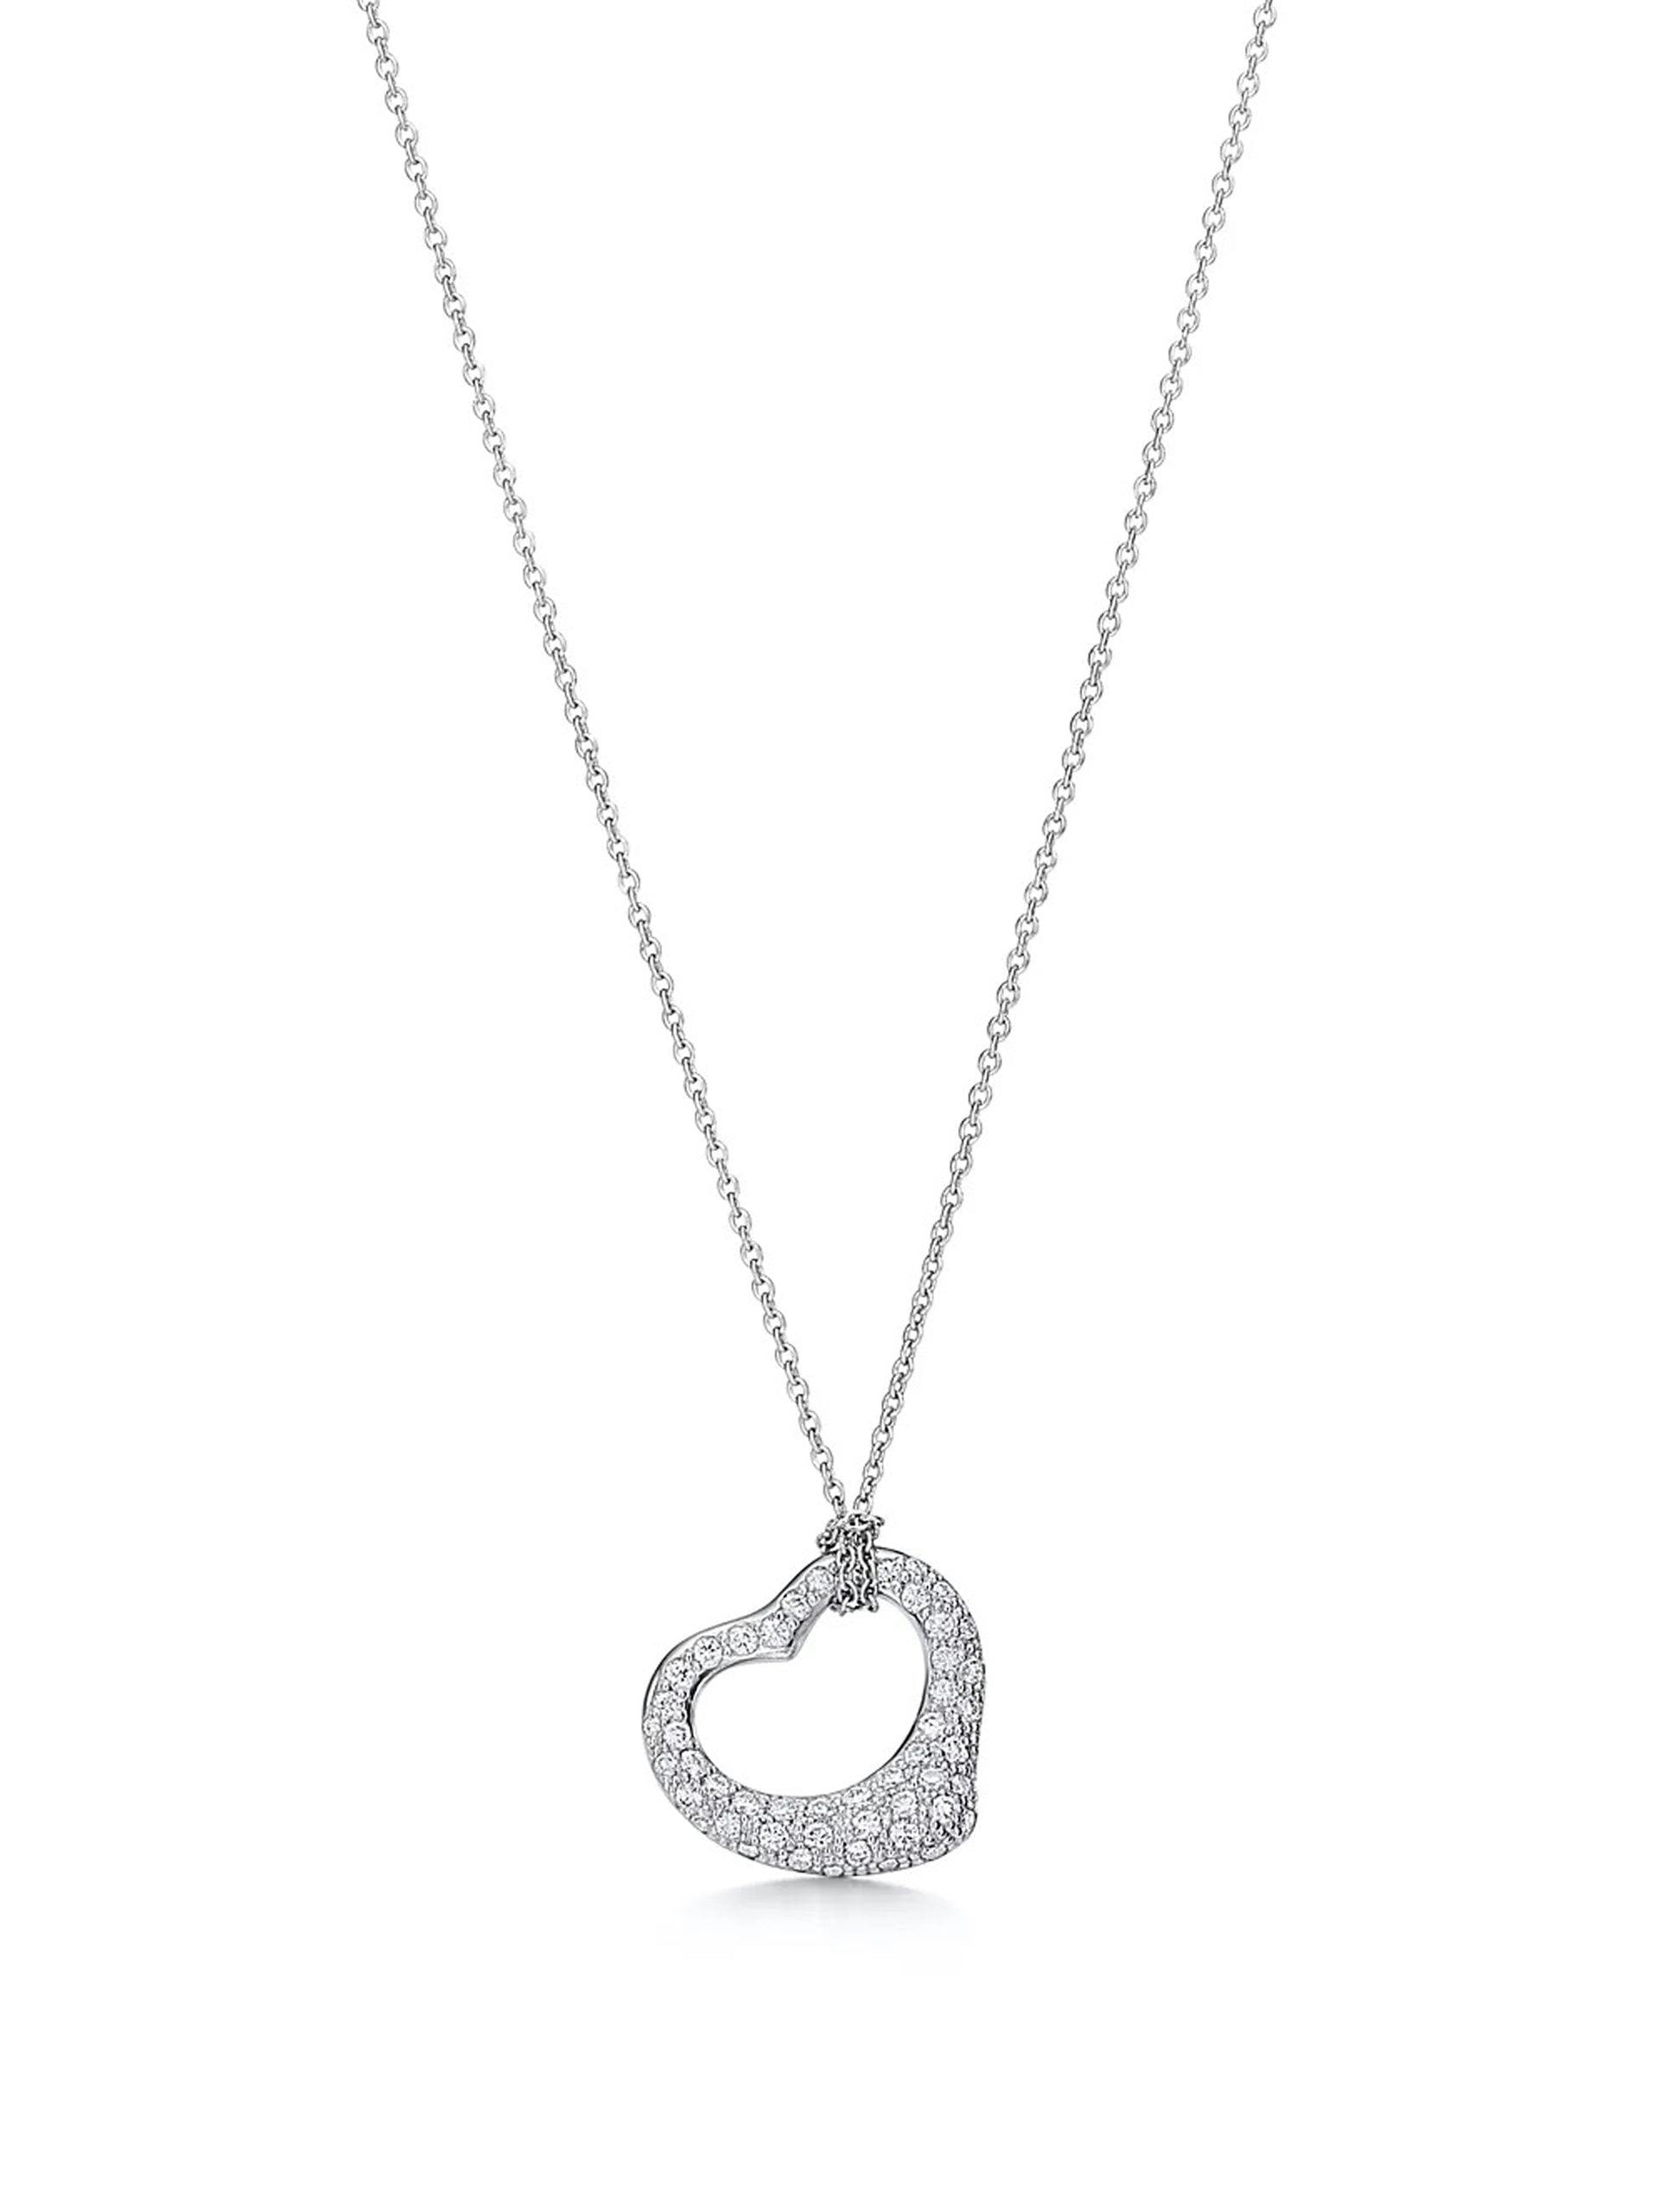 Platinum open heart pendant